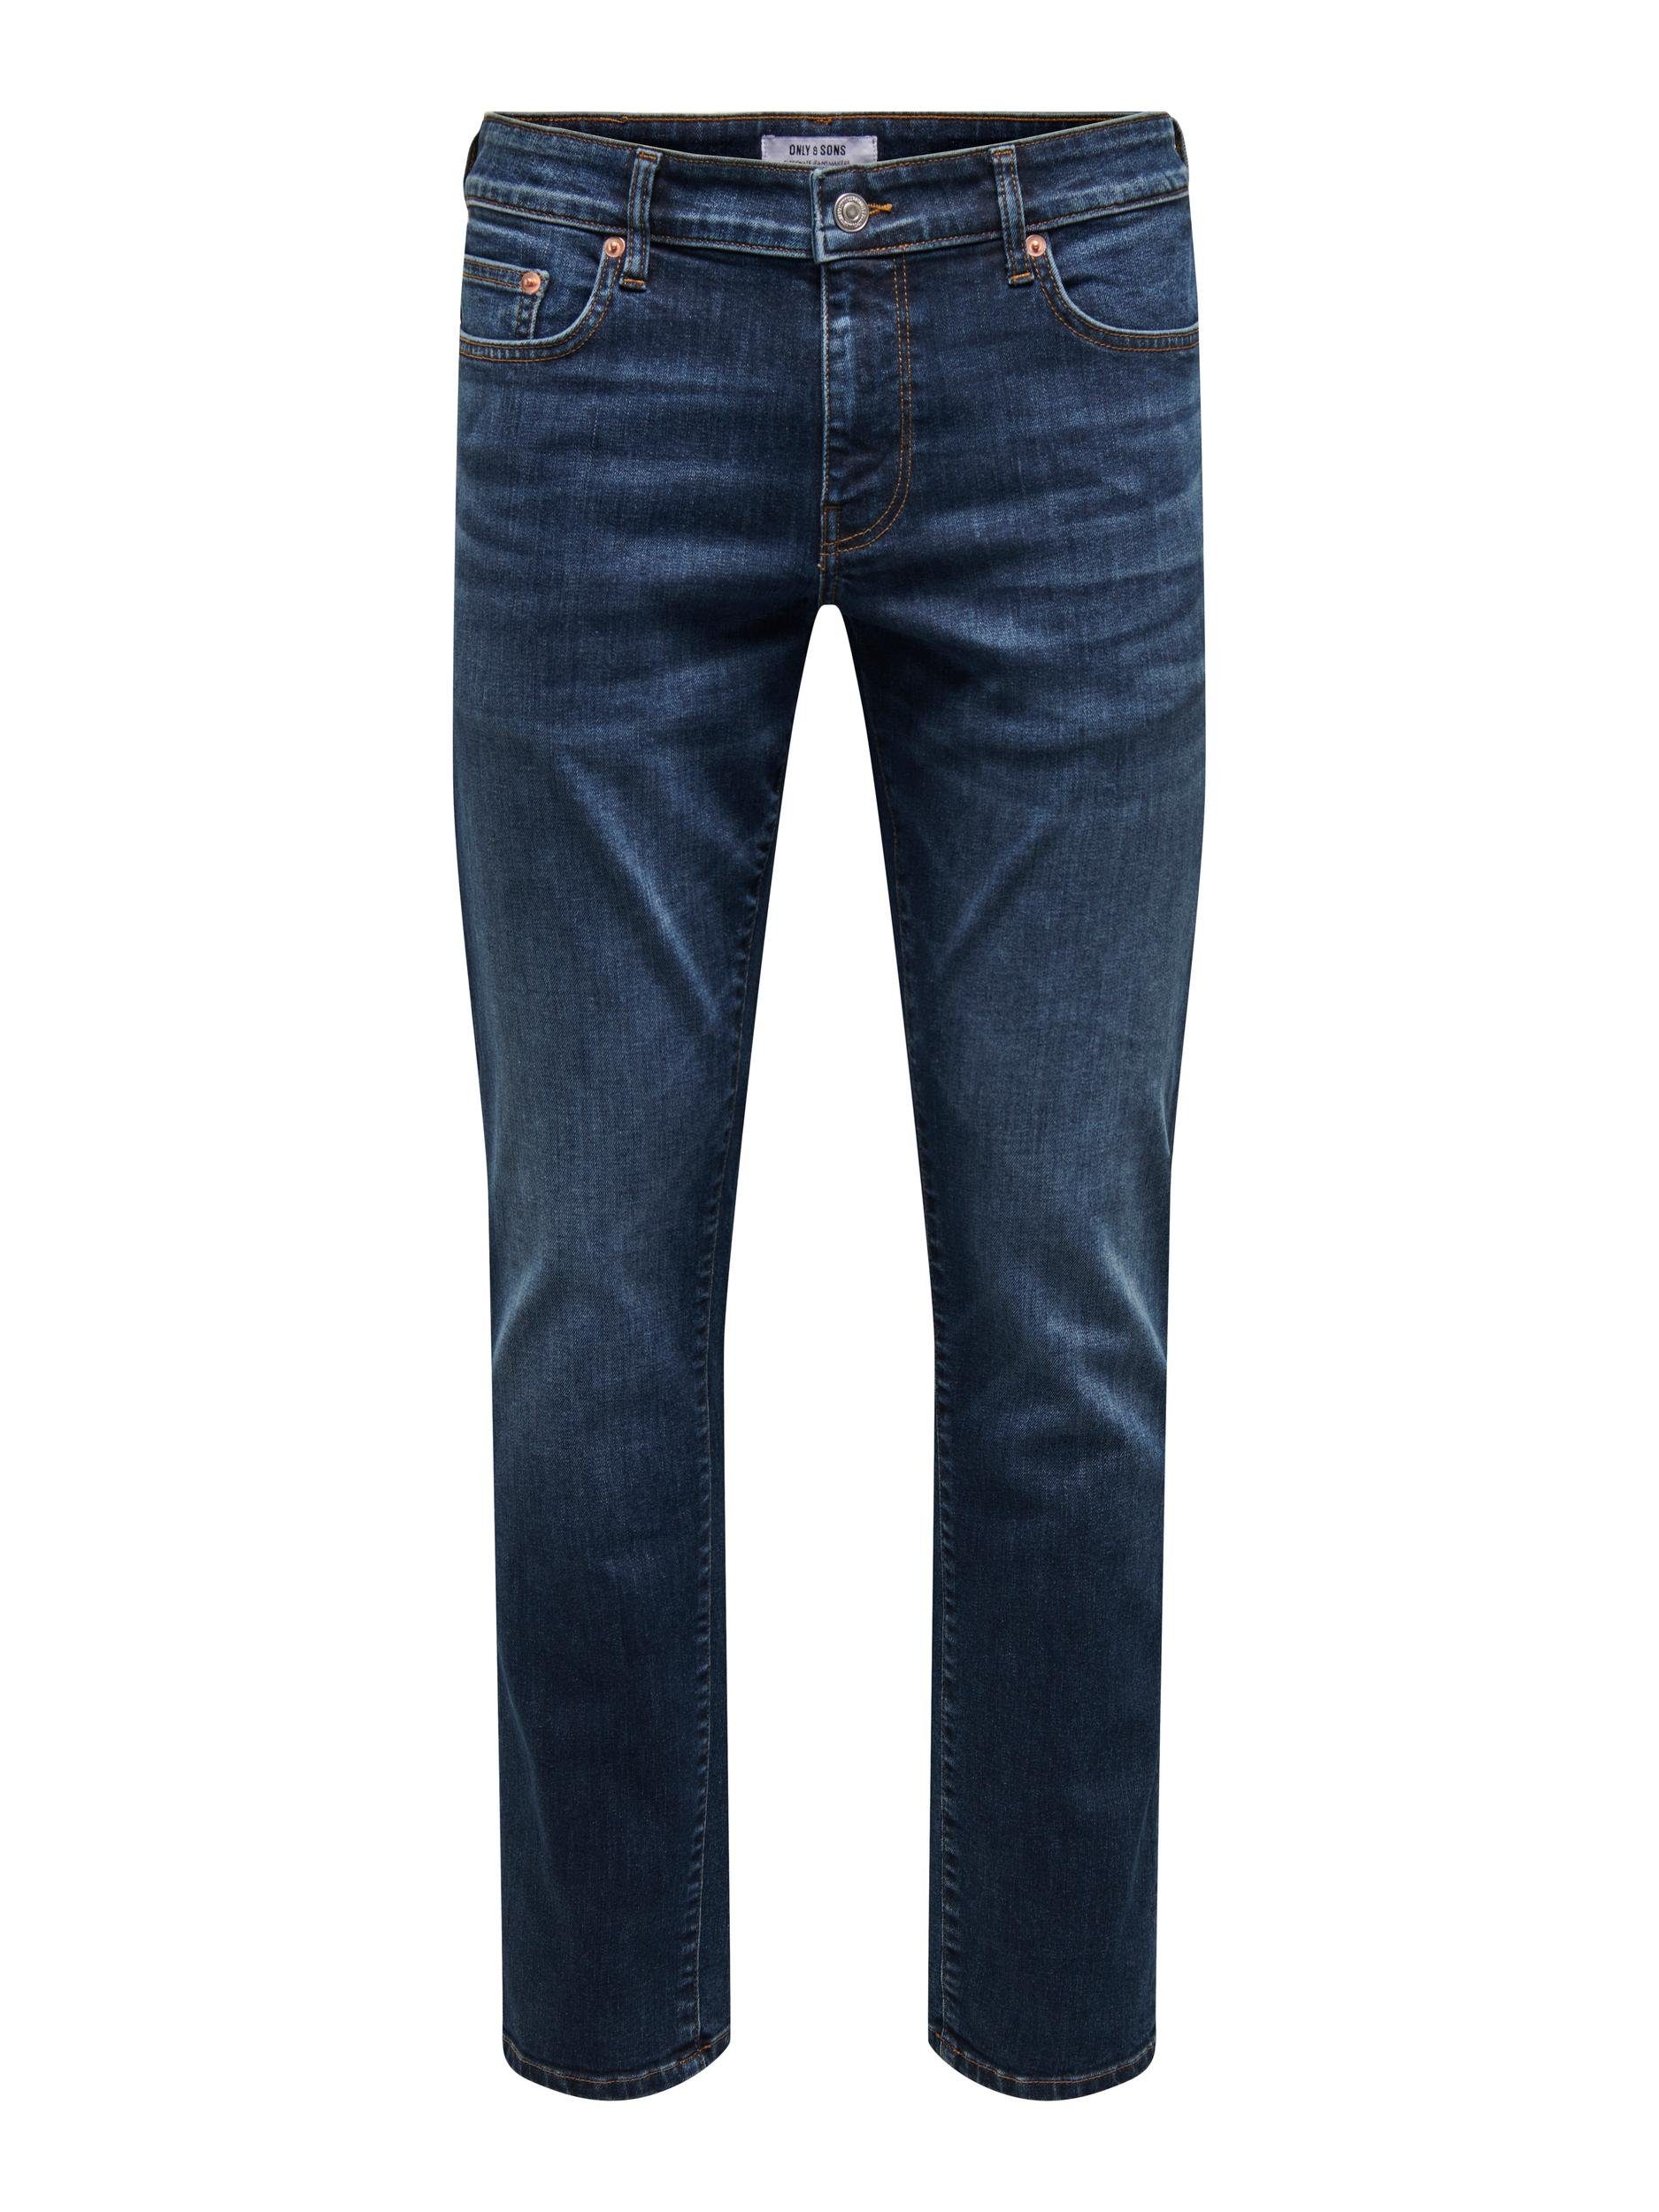 ONLY & SONS Slim fit jeans ONSLOOM SLIM D. BLUE 7777 DNM JEANS OT